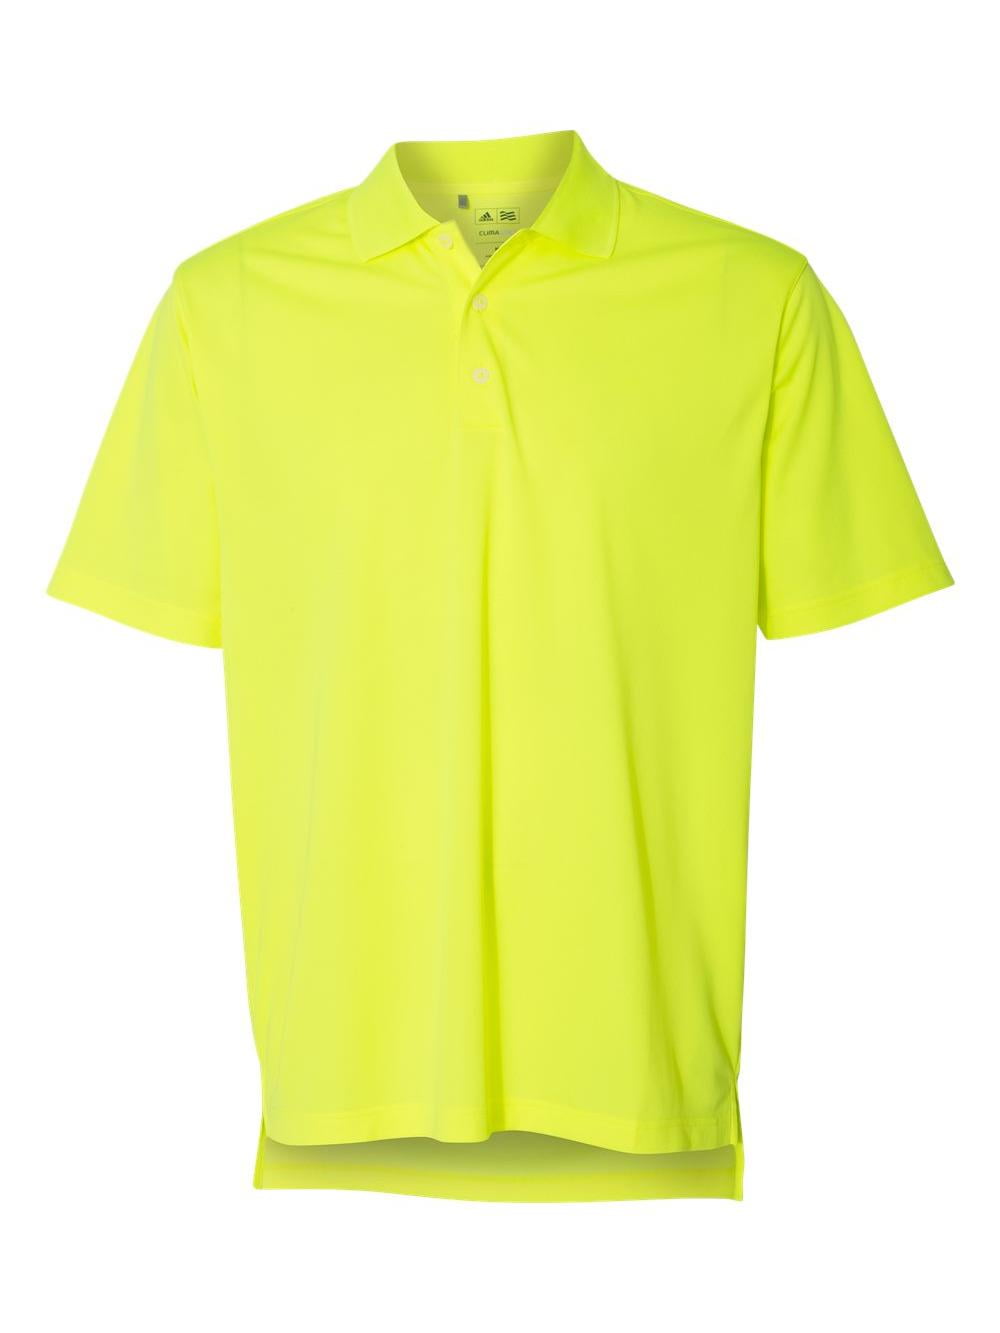 Adidas Sport Shirts Climalite Basic Sport Shirt - Walmart.com